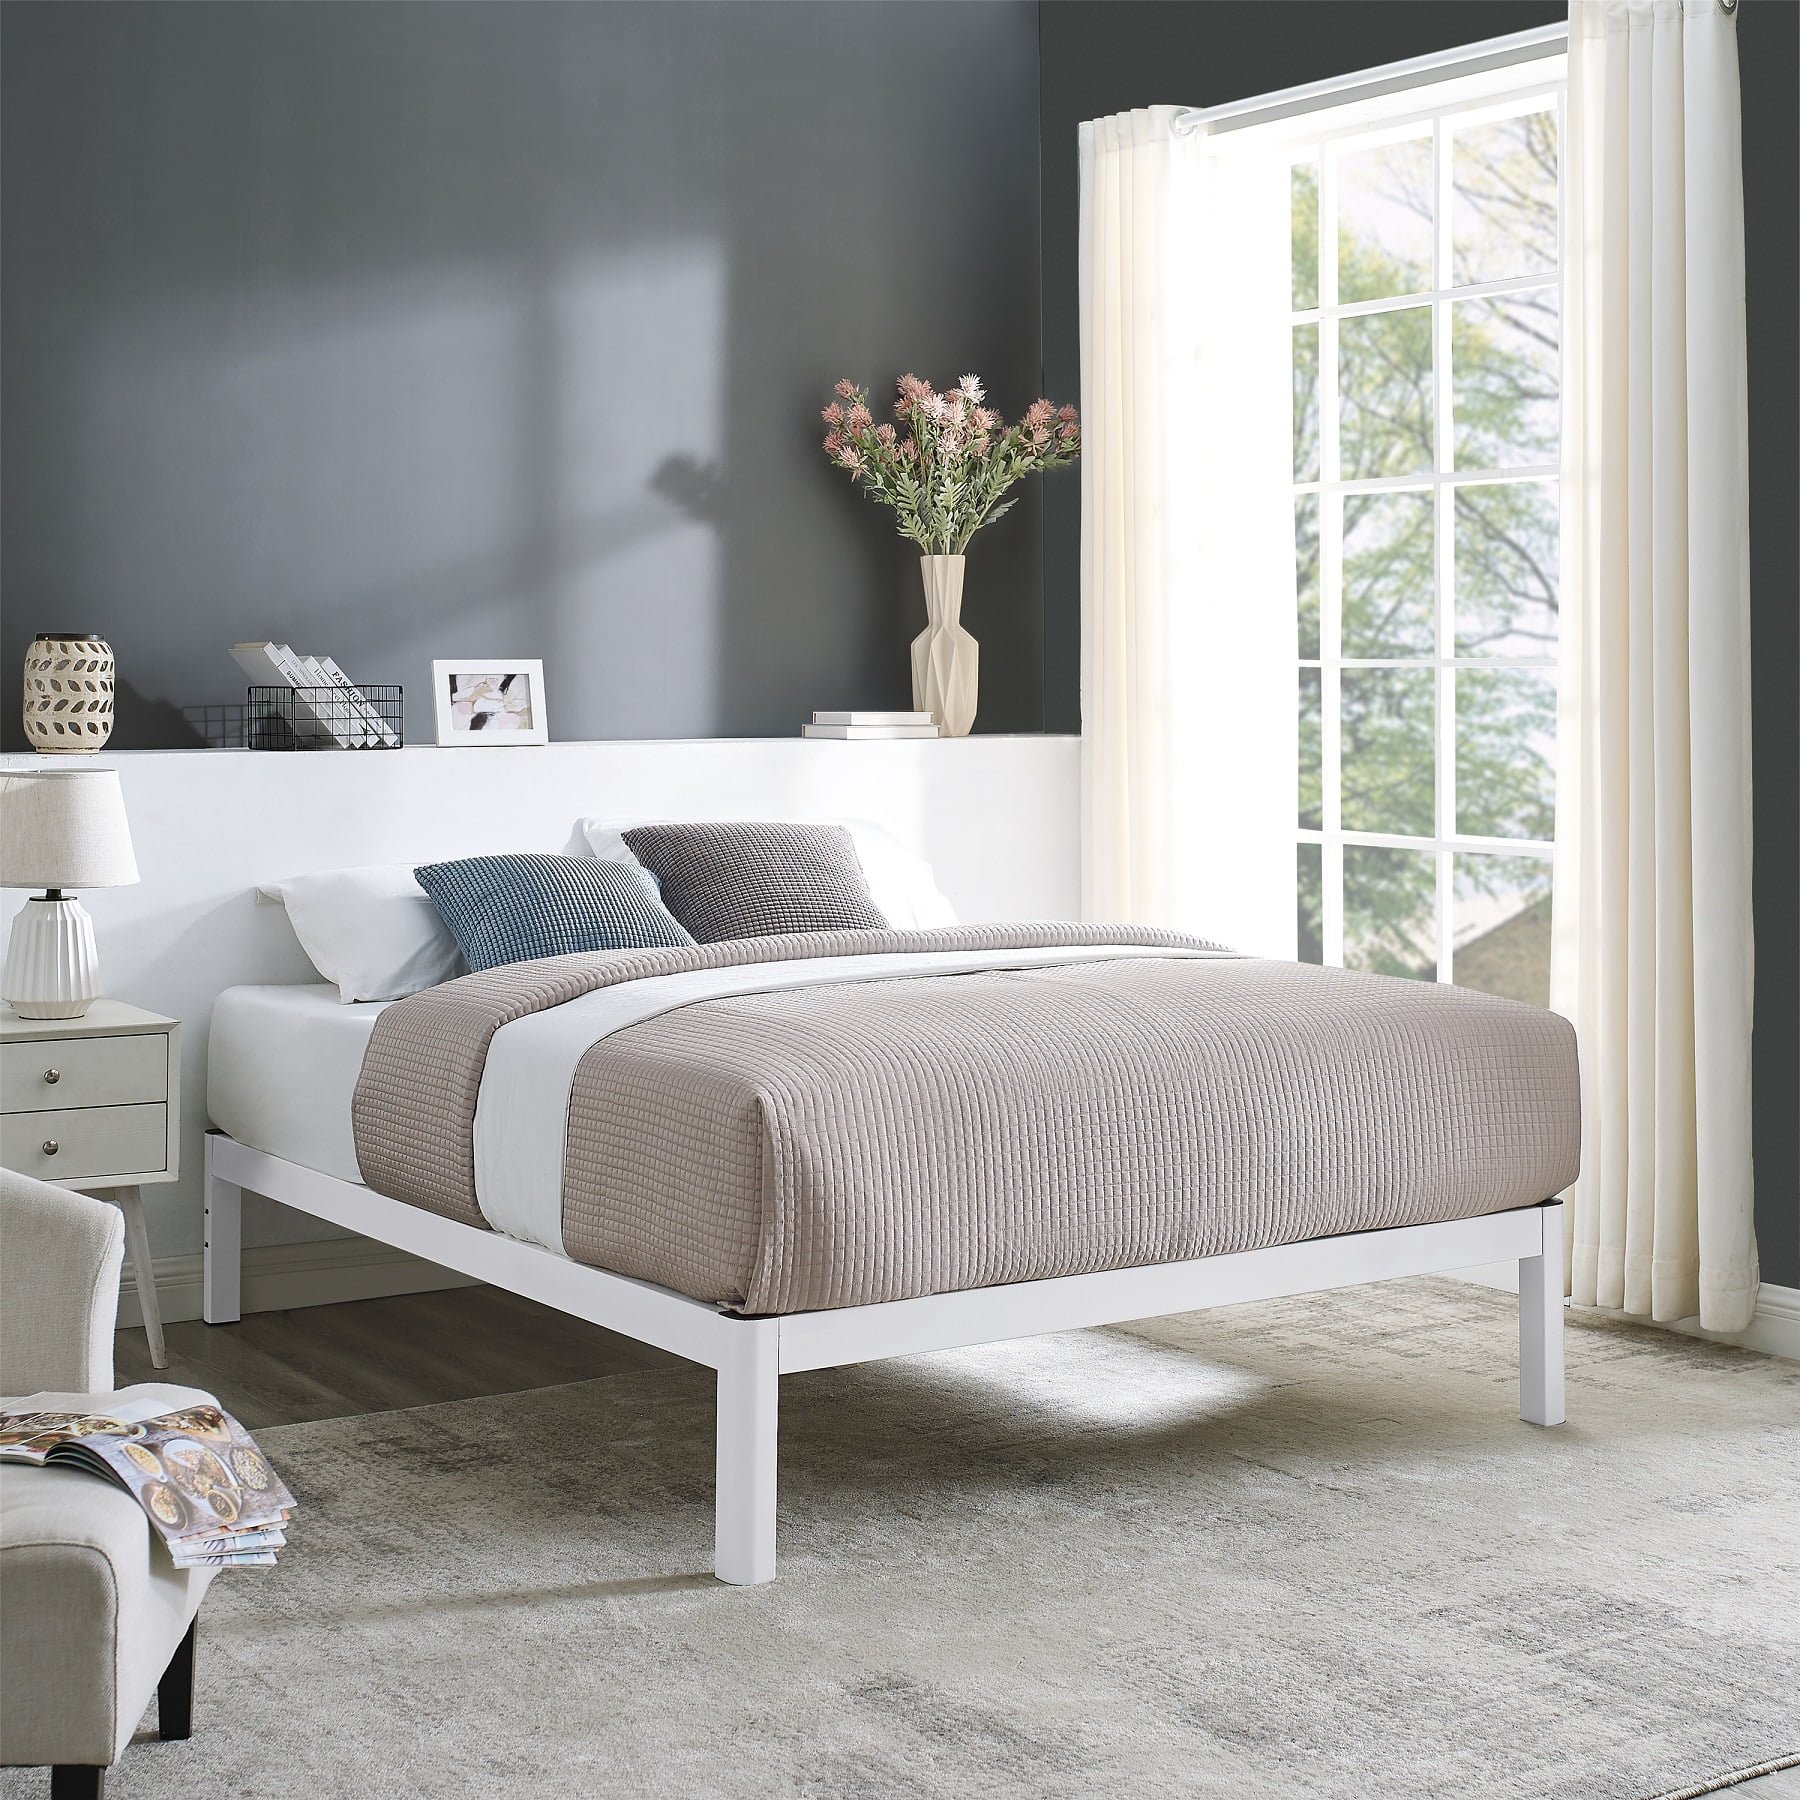 Mainstays Wood Slat White Metal Bed, Mainstays Twin Slat Metal Bed Frame